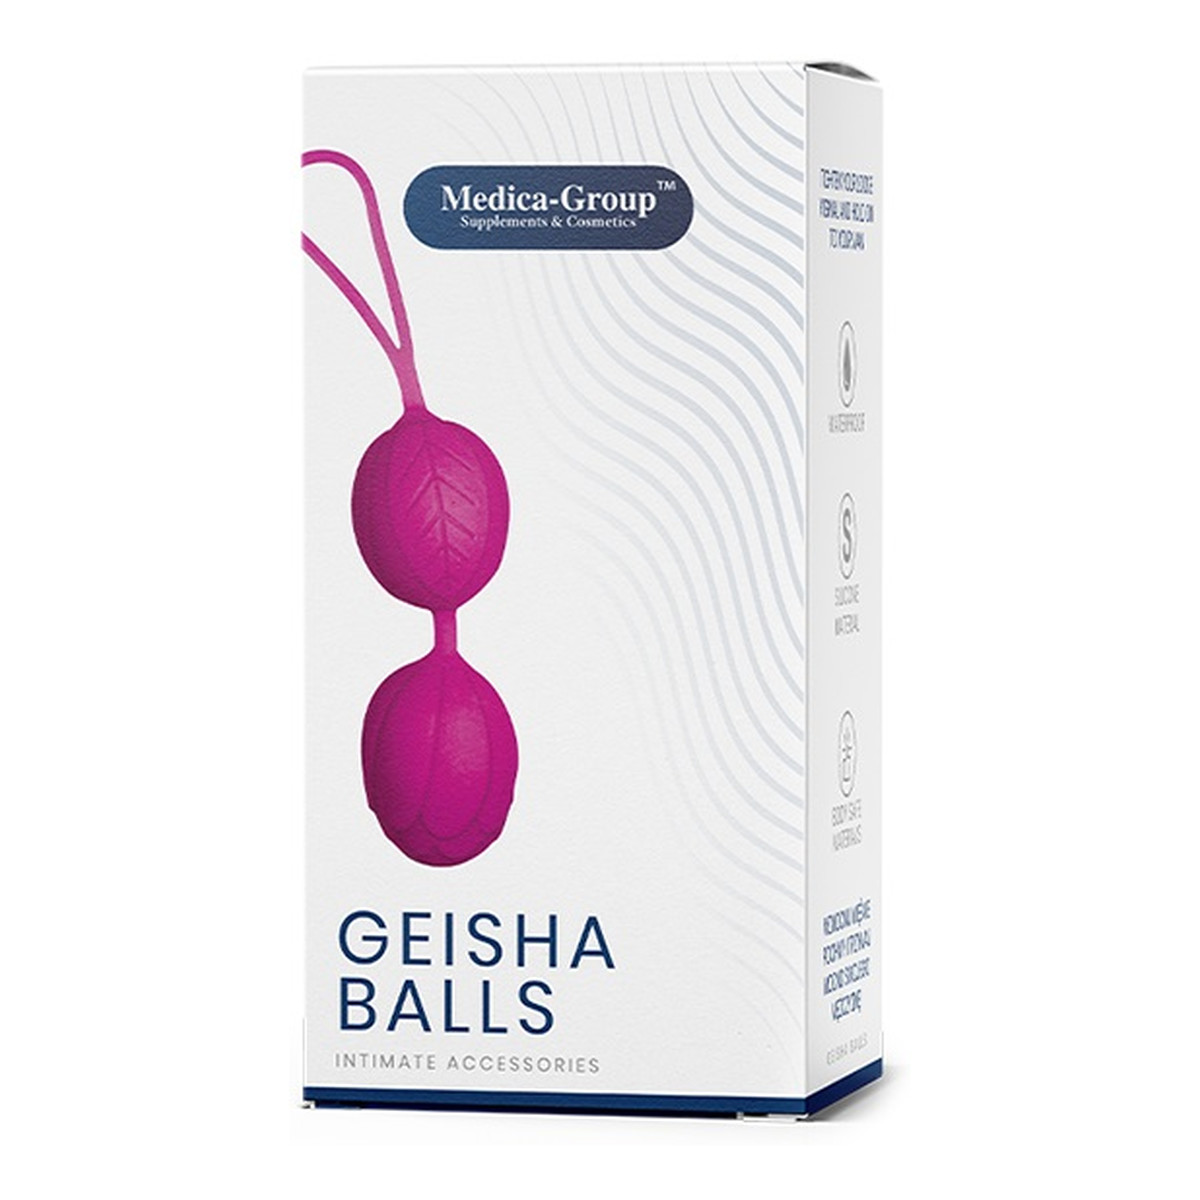 Medica-Group Geisha balls kulki gejszy pink